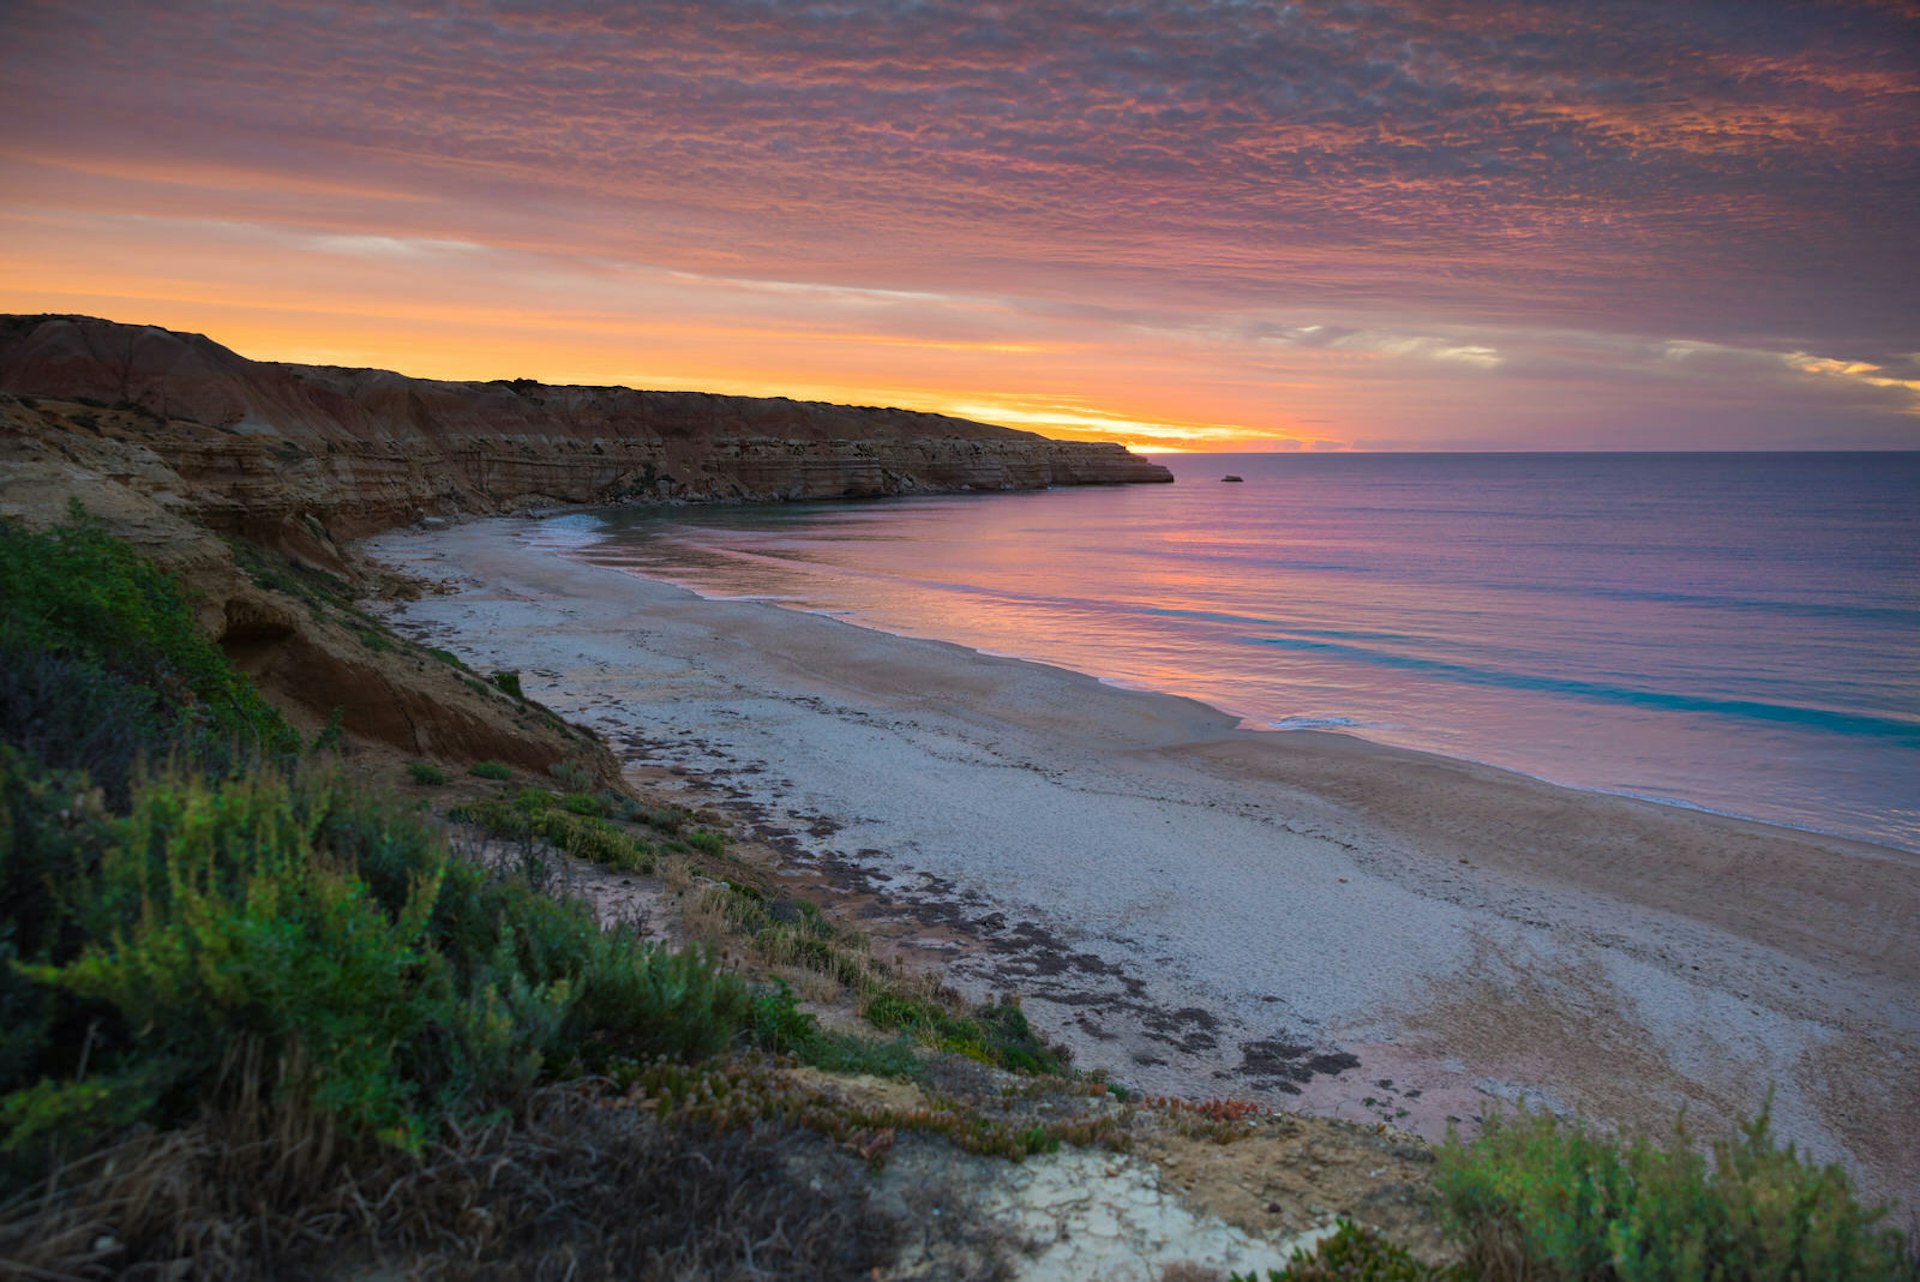 Green Nudist Voyeur - Australia's 7 best nudist beaches - Lonely Planet